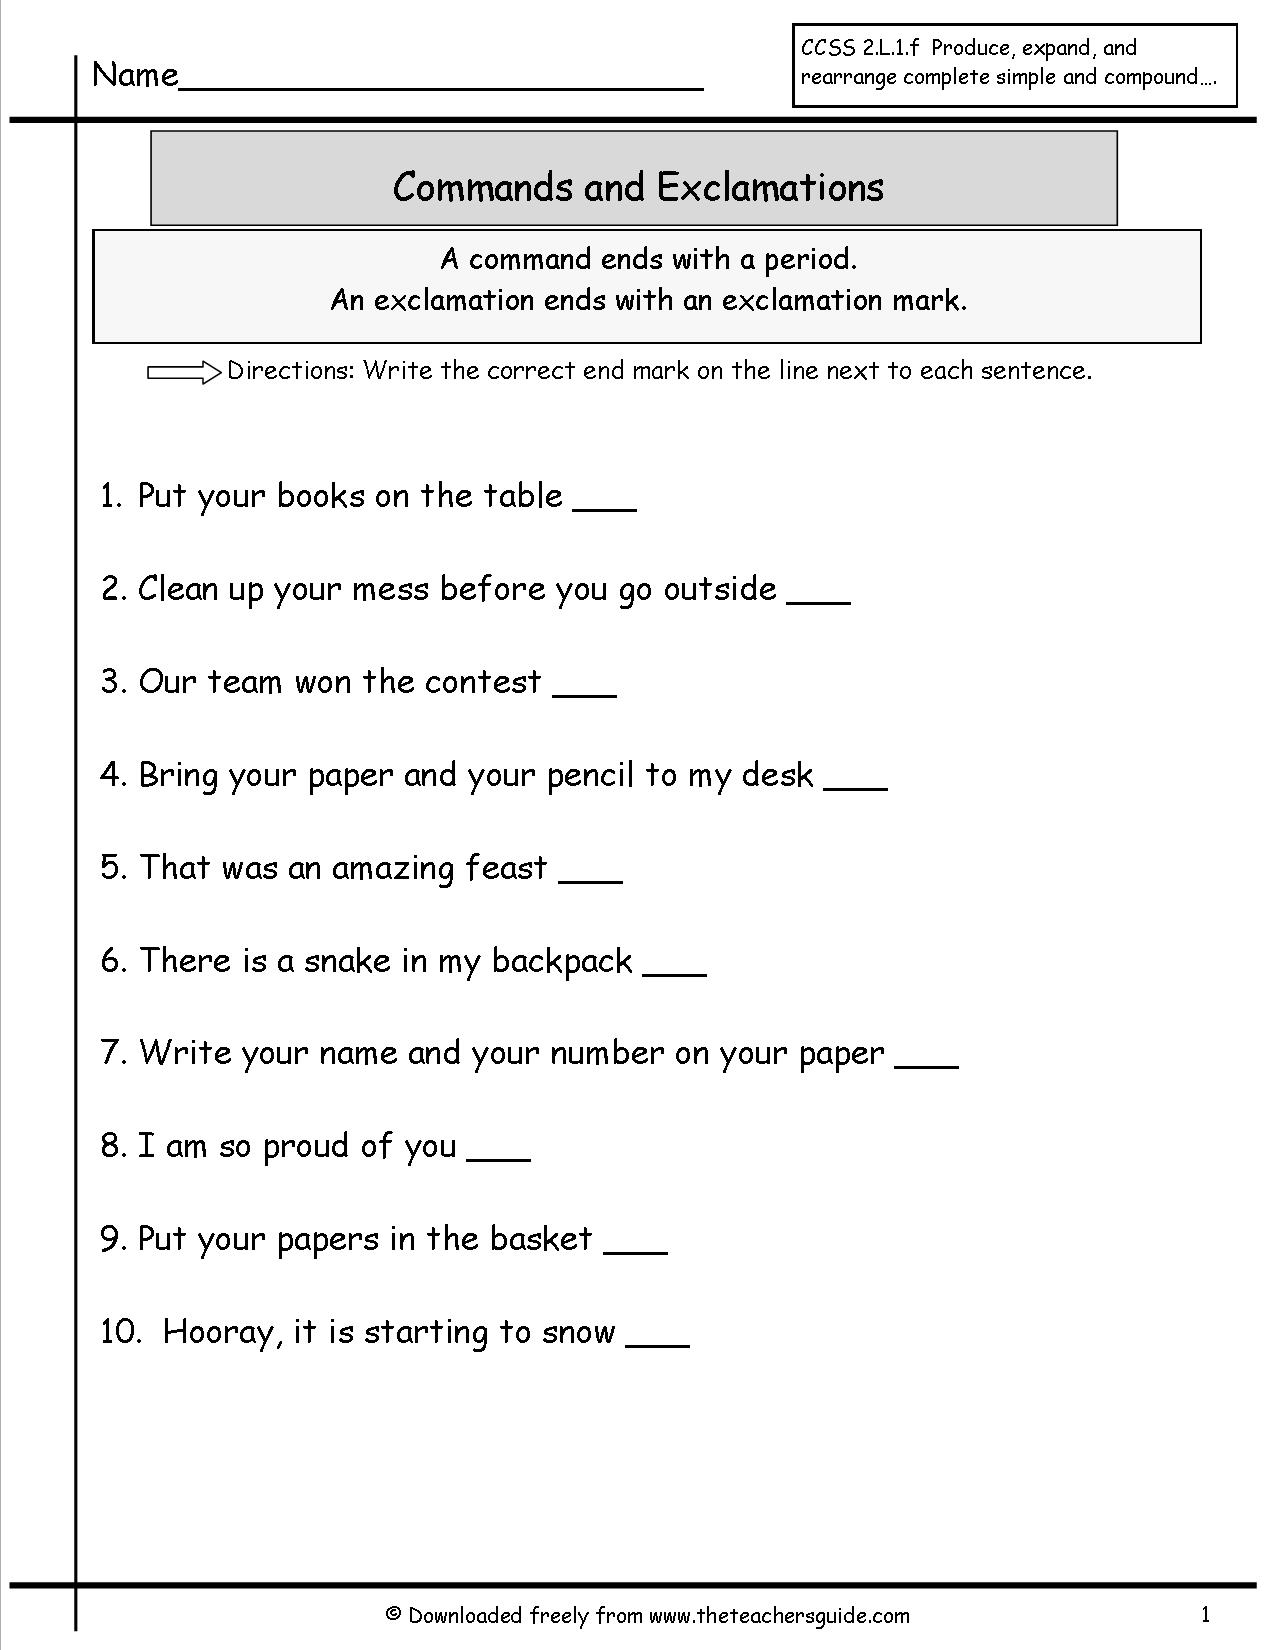 12 Best Images of 4 Sentence Types Worksheets - Command Sentences